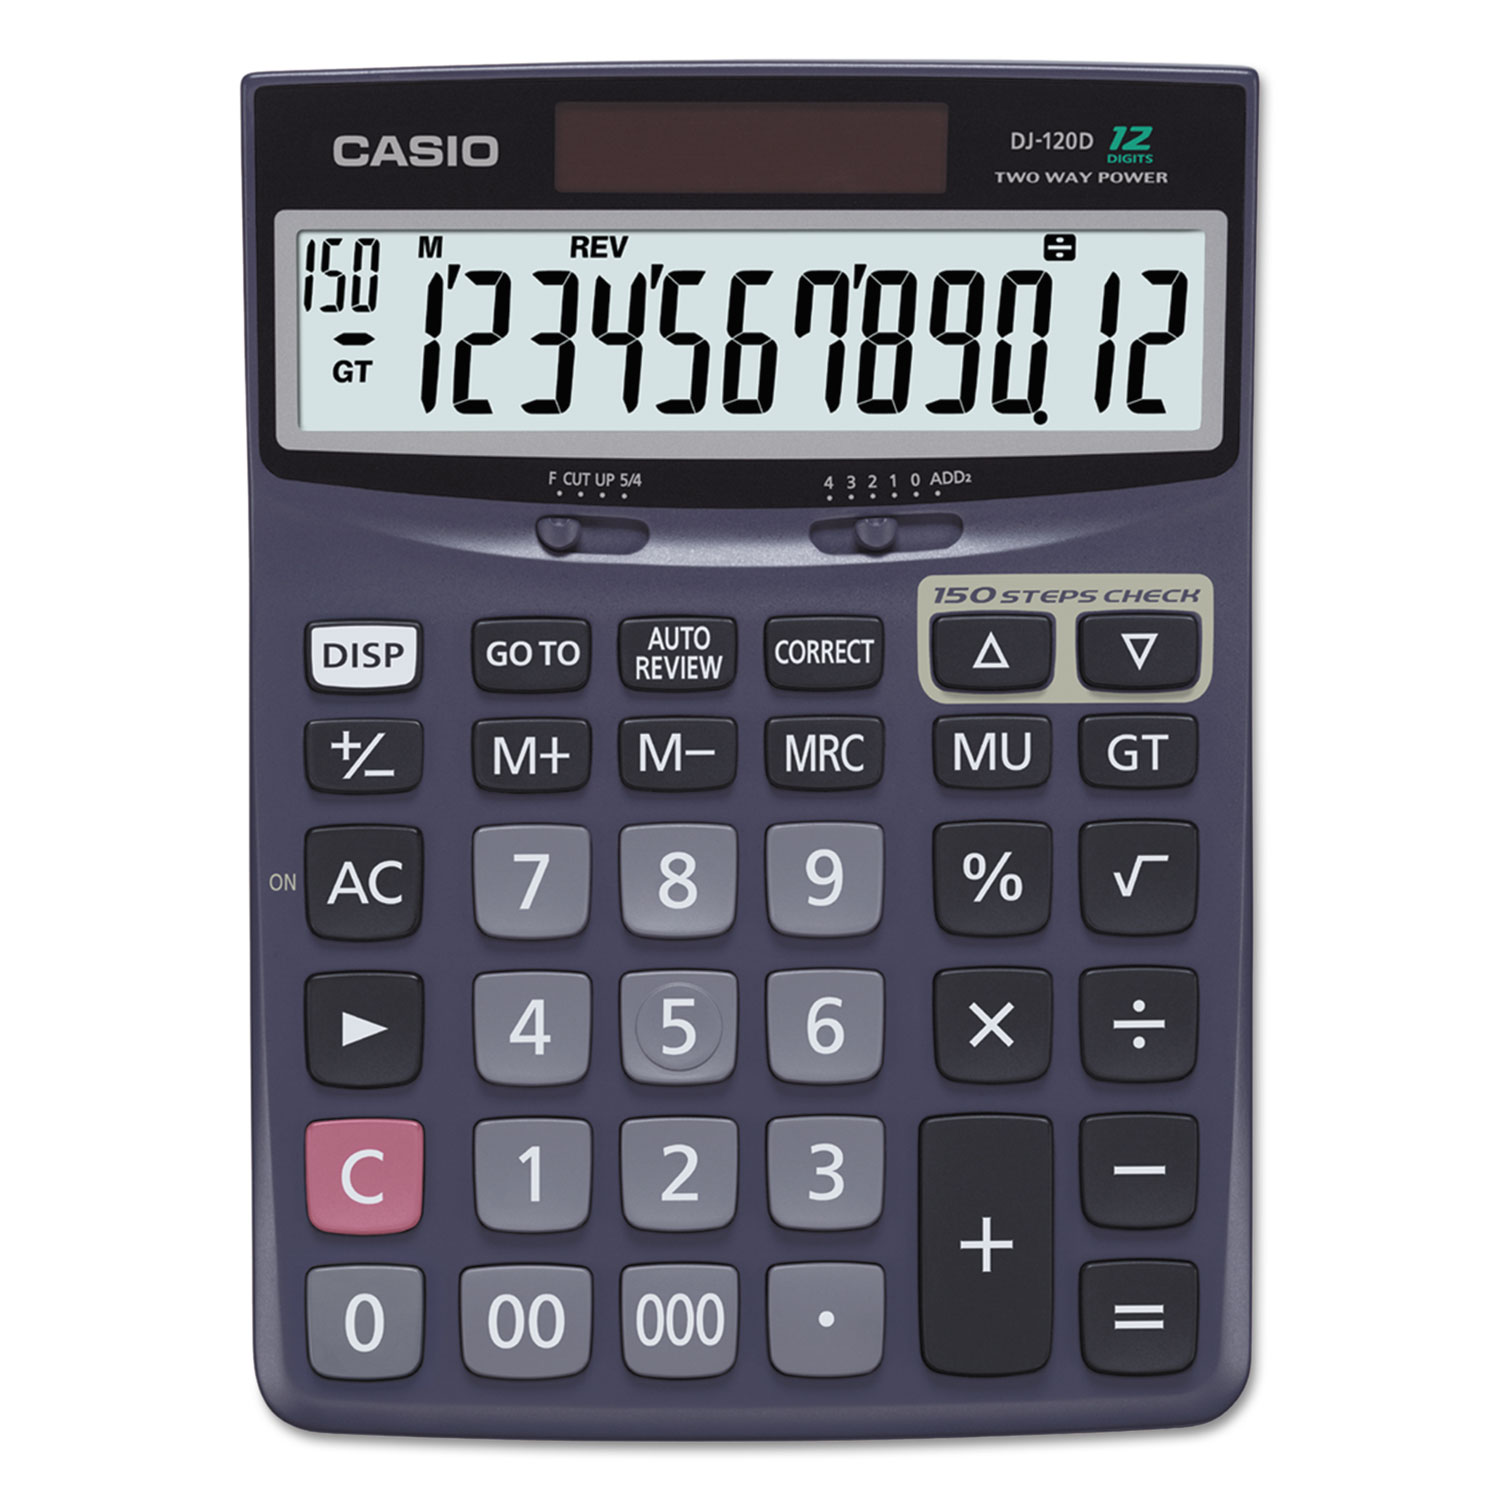 DJ120D Calculator